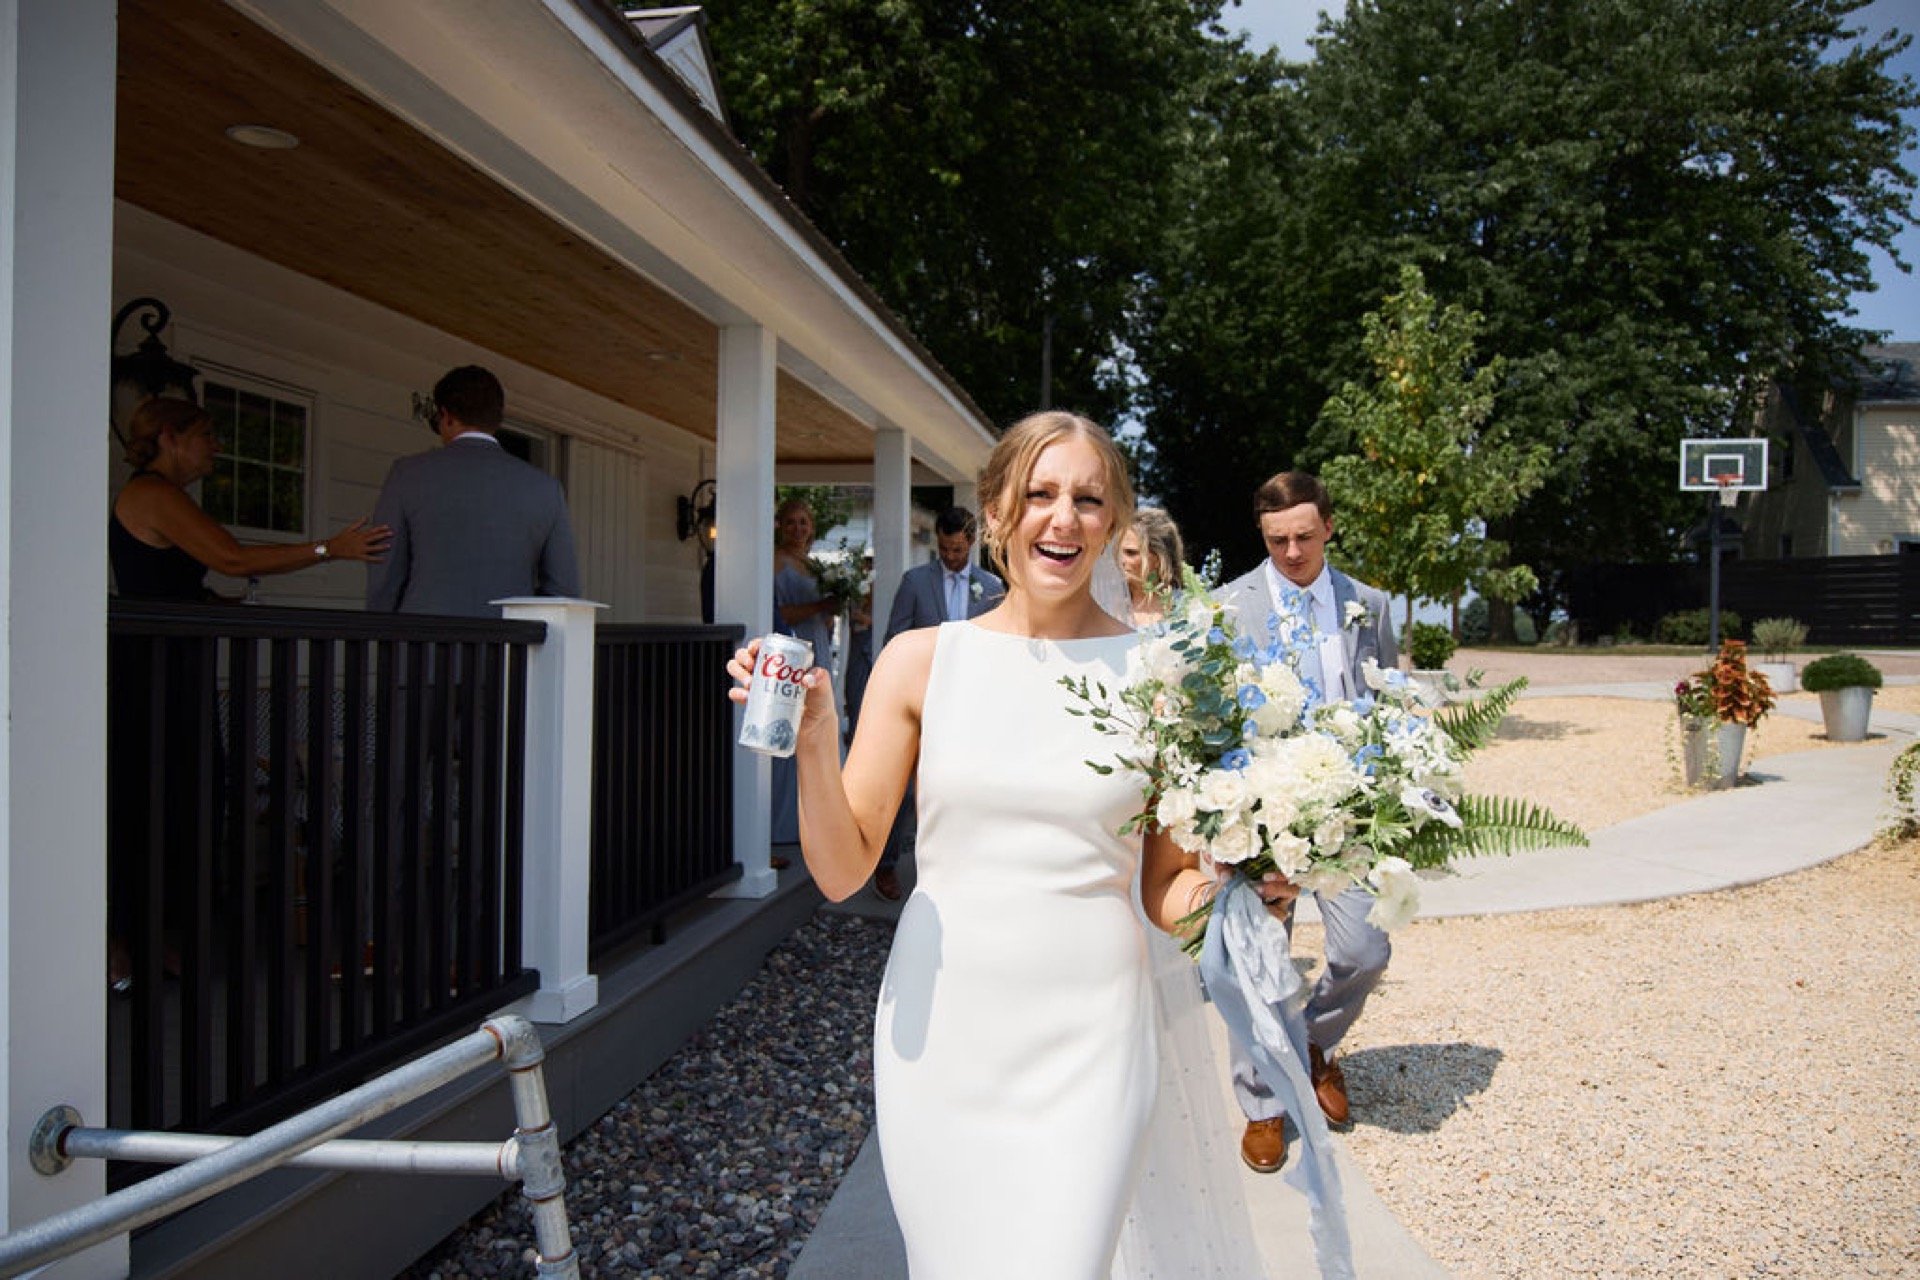 03_legacy-hill-farm-outdoor-wedding-max-kate315_Legacy Hill Farm Wedding | White & Blue Florals | Kate & Max.jpg